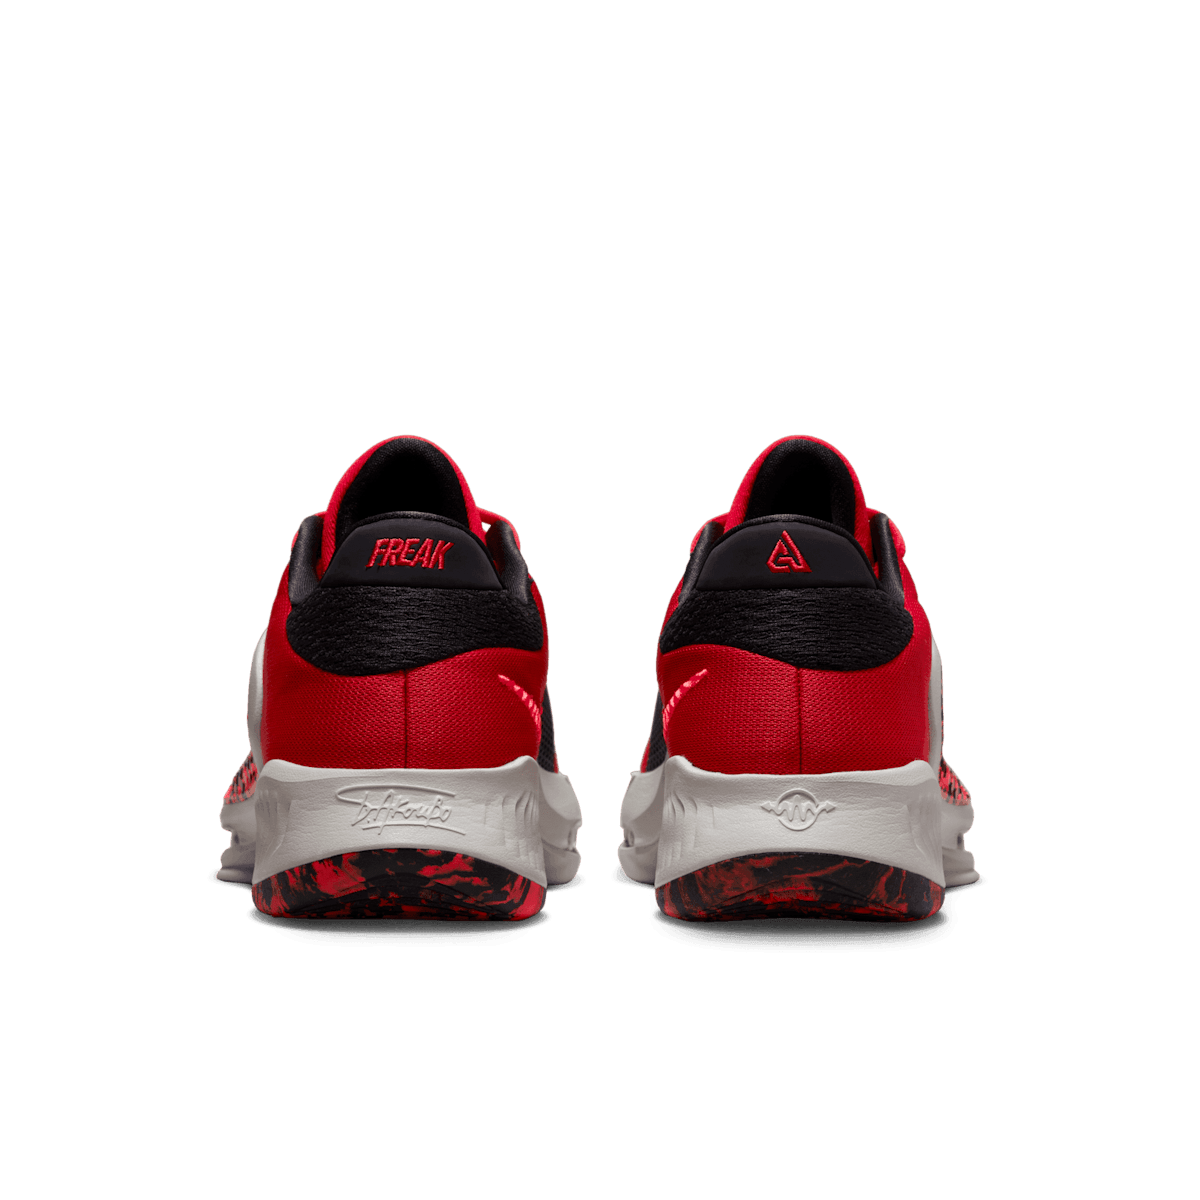 Nike Zoom Freak 4 "Safari" Basketball Shoes in Red Angle 3